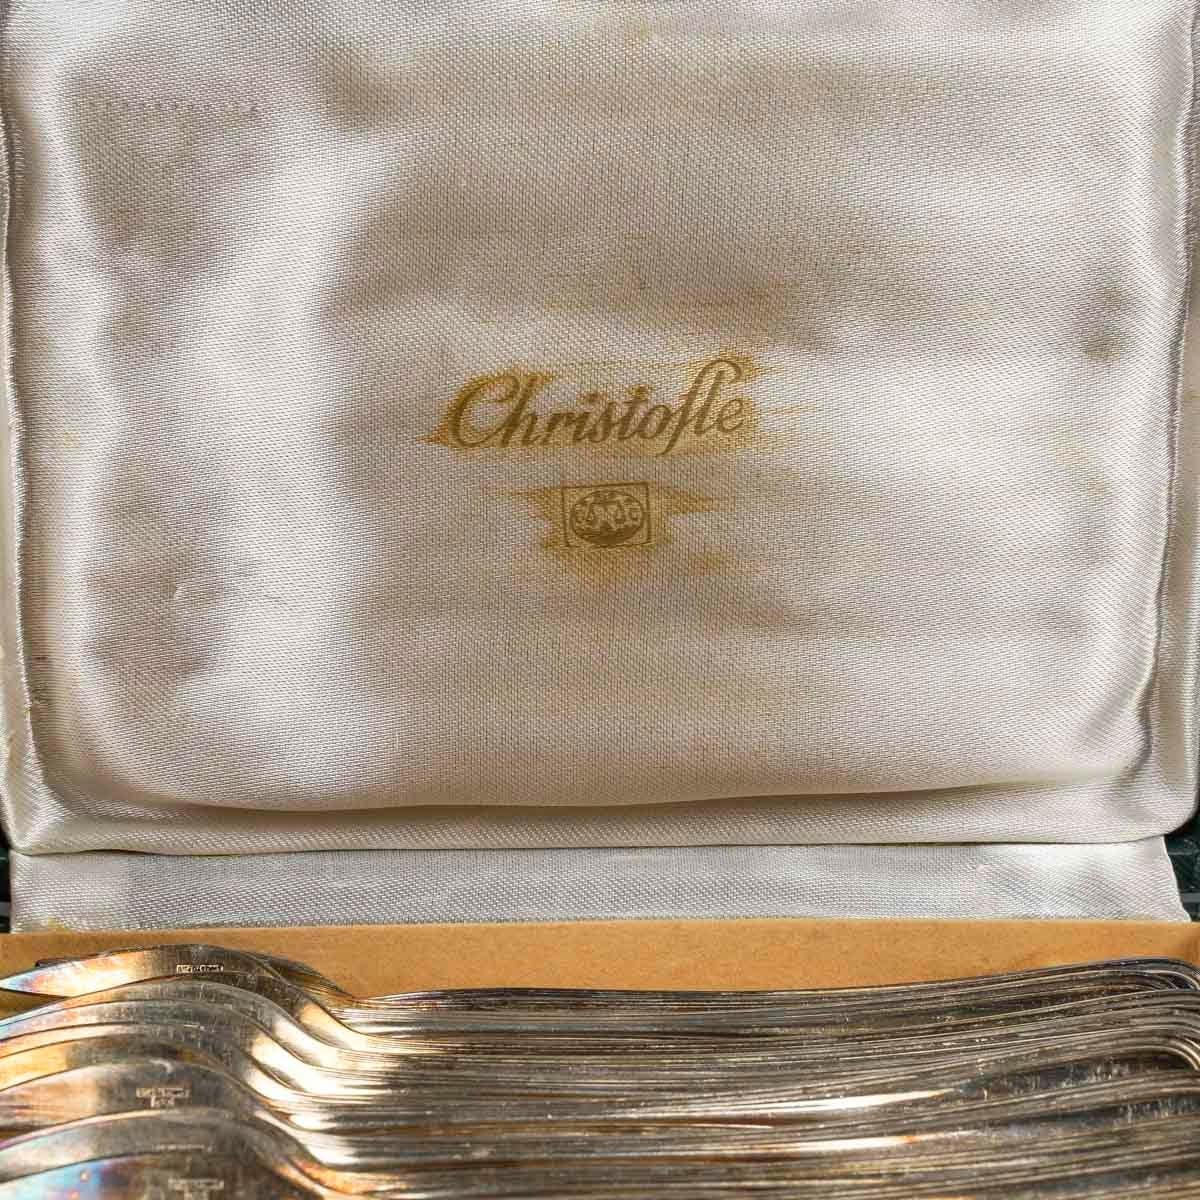 Set of 12 dessert forks by Christofle Goldsmith in Paris, 1960-1970.

Set of 12 silver plated dessert forks in the original box by Christofle Goldsmith in Paris, 1960-1970.
Box: H: 4cm, W: 18cm, D: 14cm